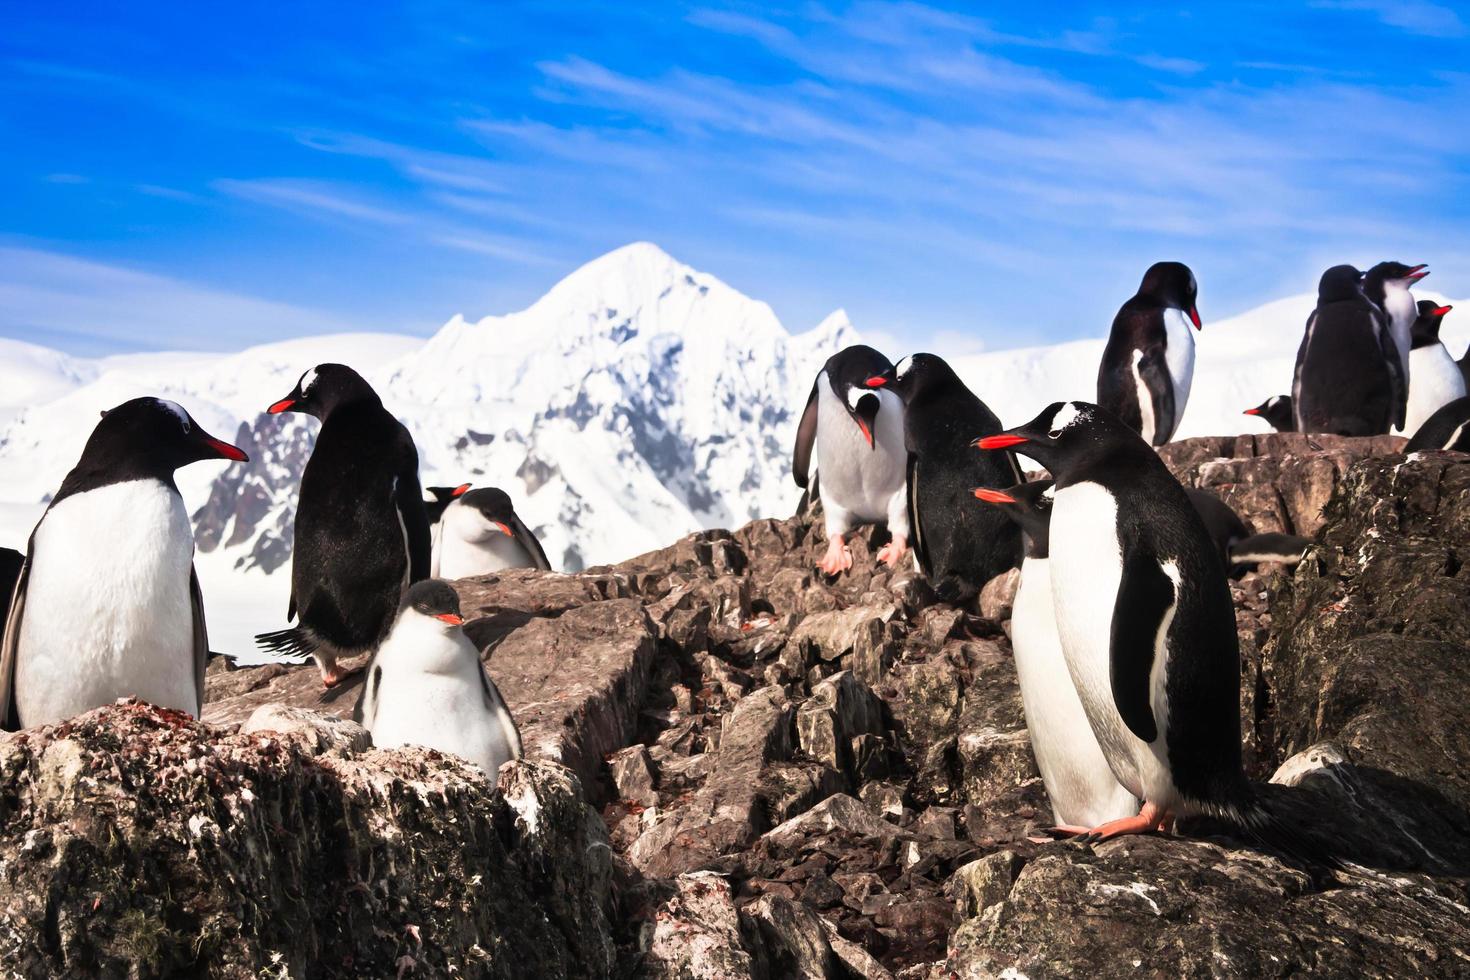 penguins in Antarctica photo